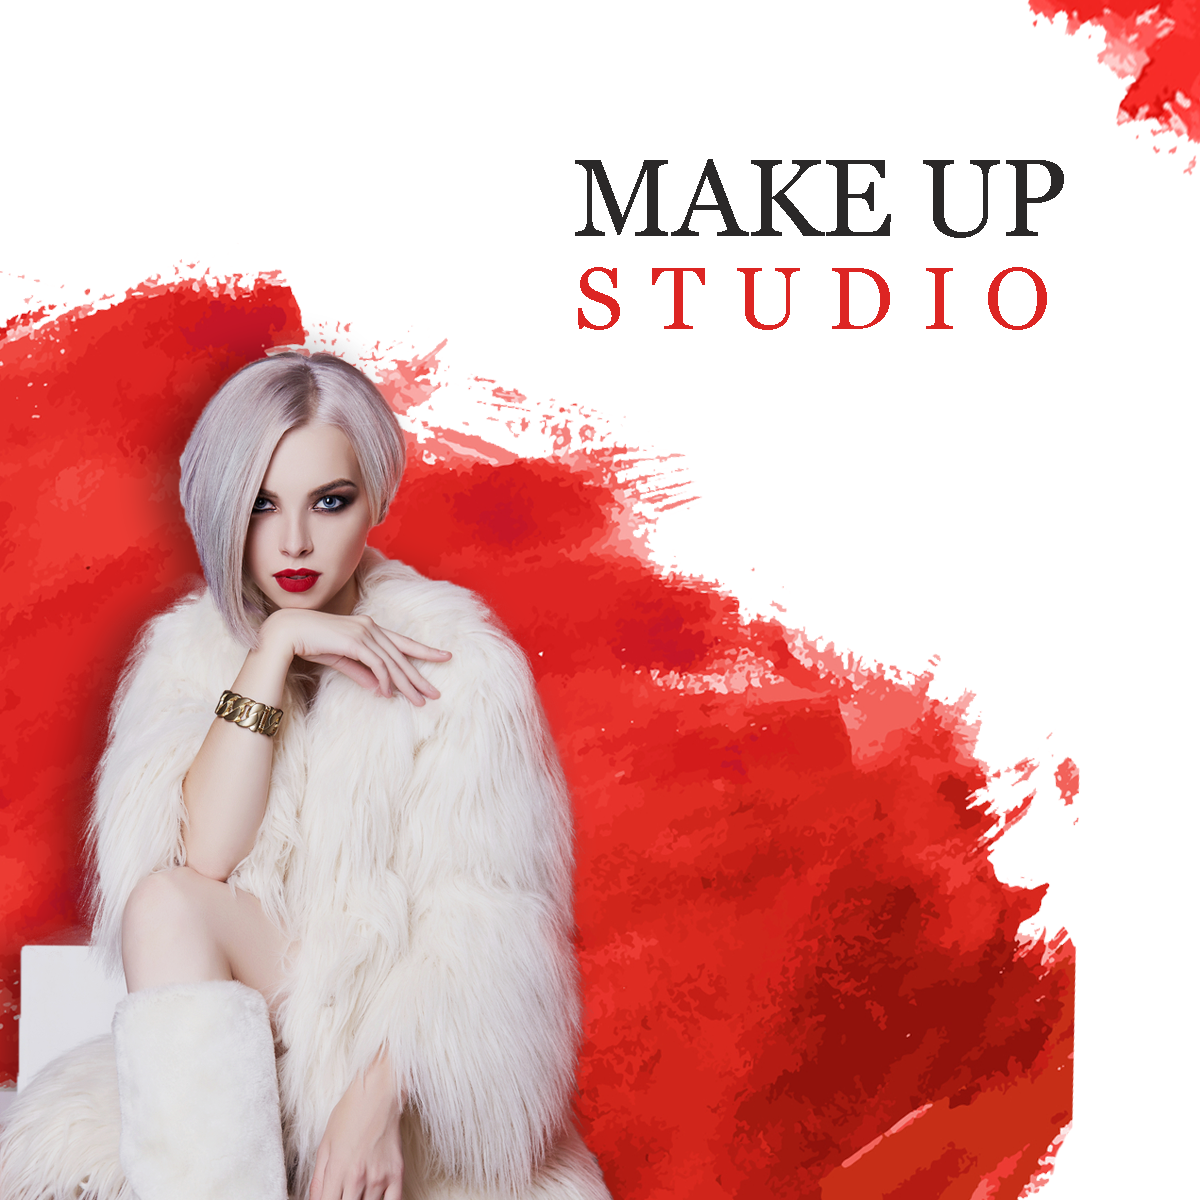 makeup studio design